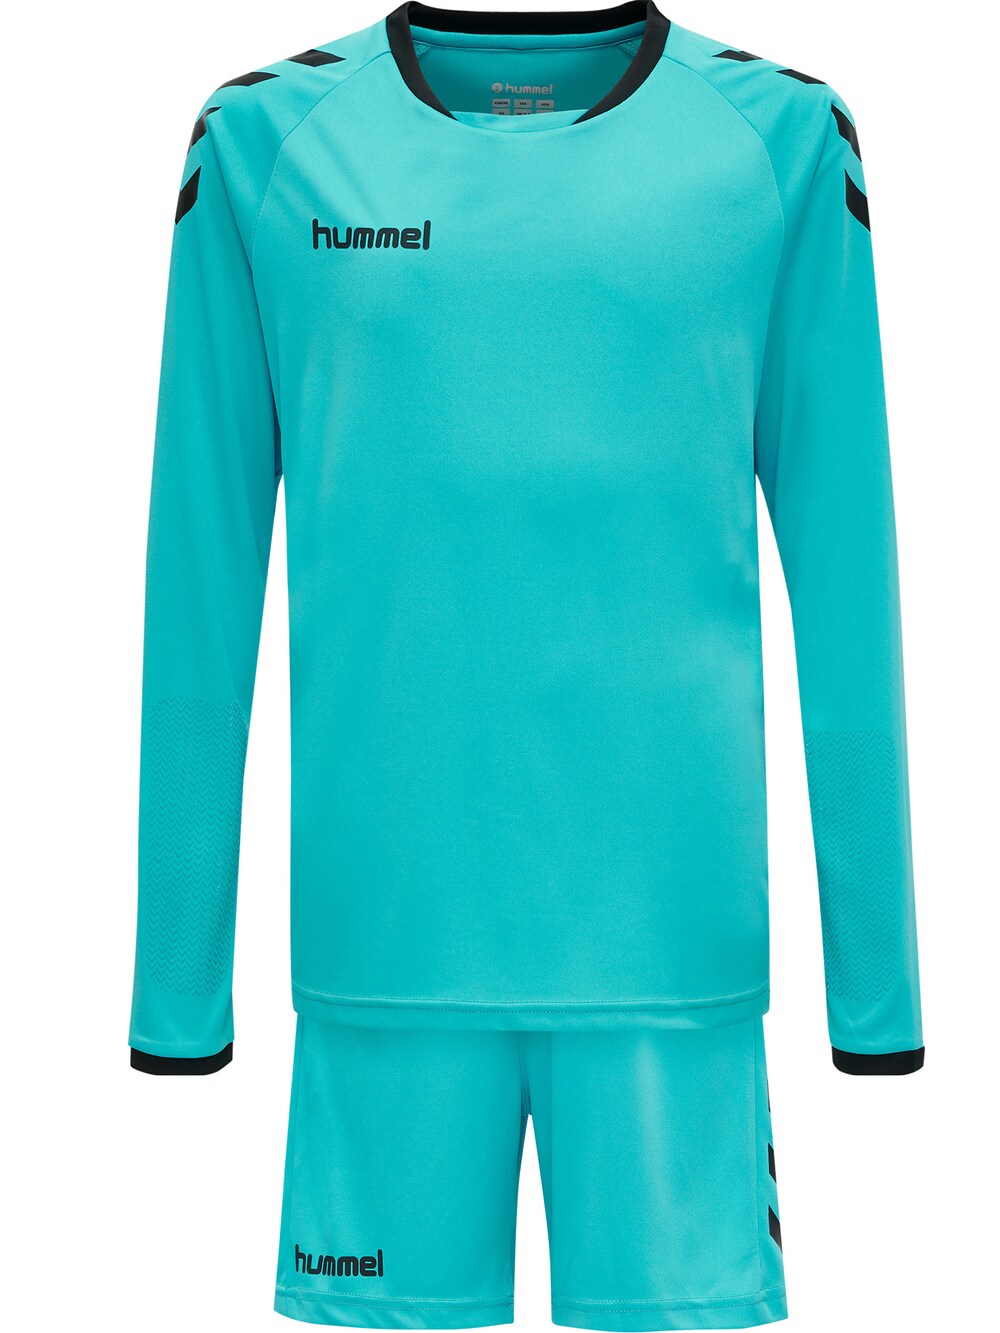 Спортивный костюм Hummel, синий